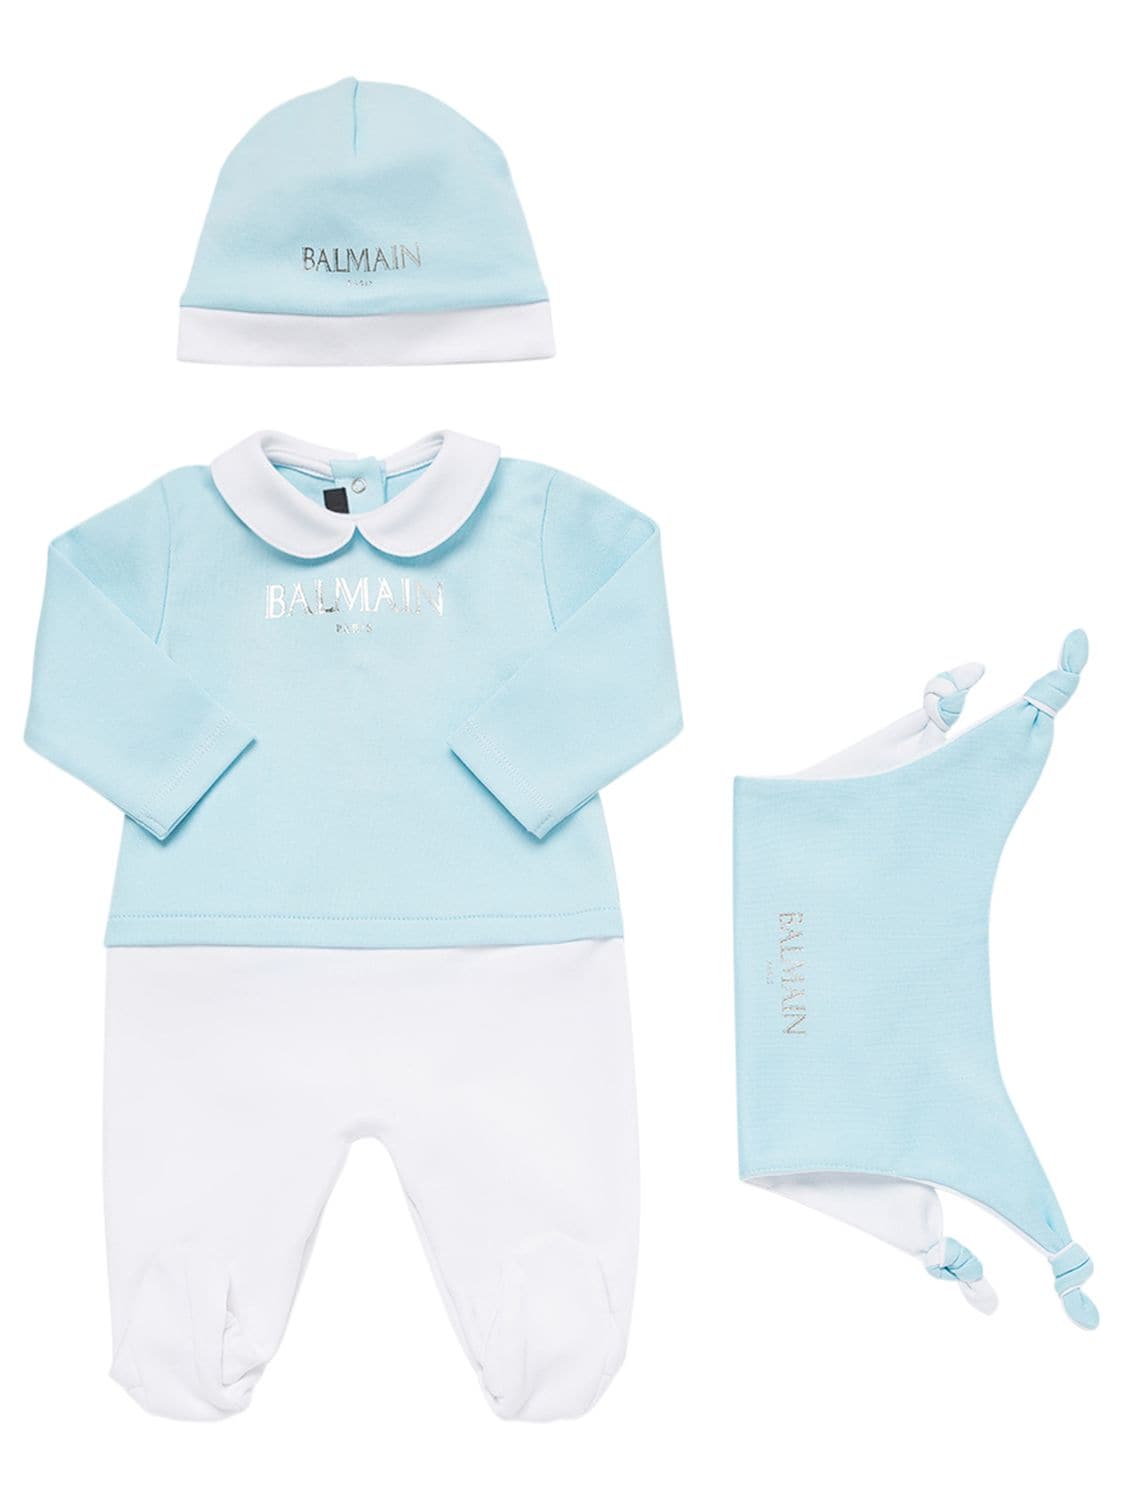 Balmain Babies' Organic Cotton Jersey Romper, Hat & Toy In Blue